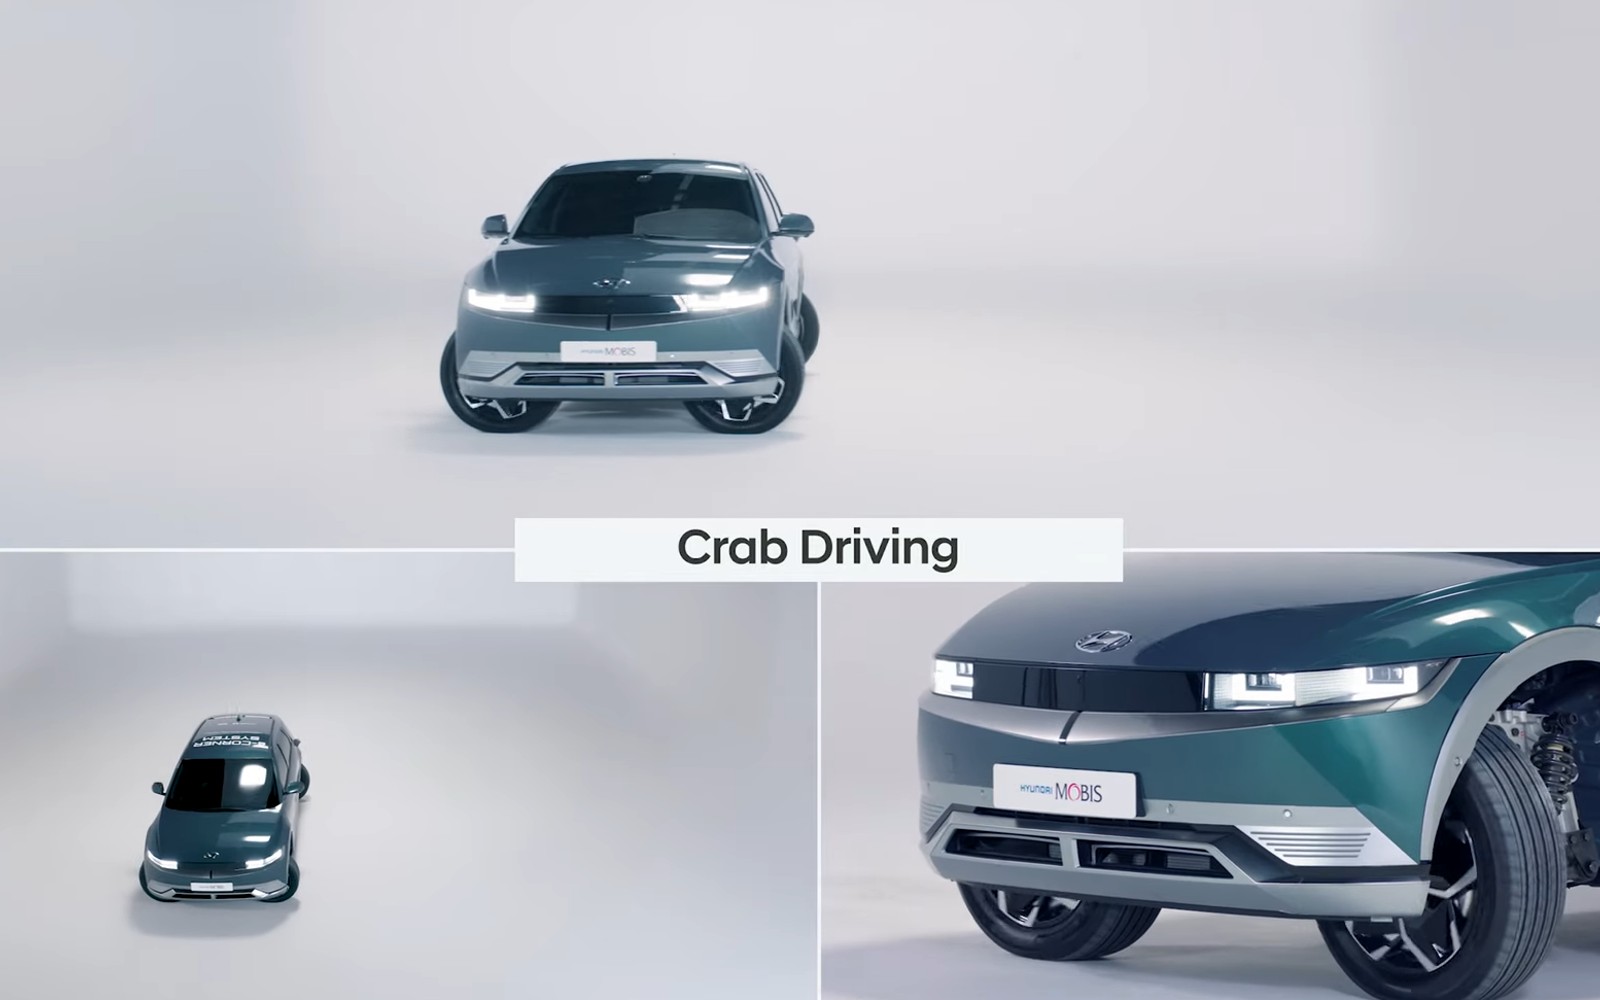 Hyundai managed to put its ‘crab-walking’ e-Corner technology into an Ioniq EV